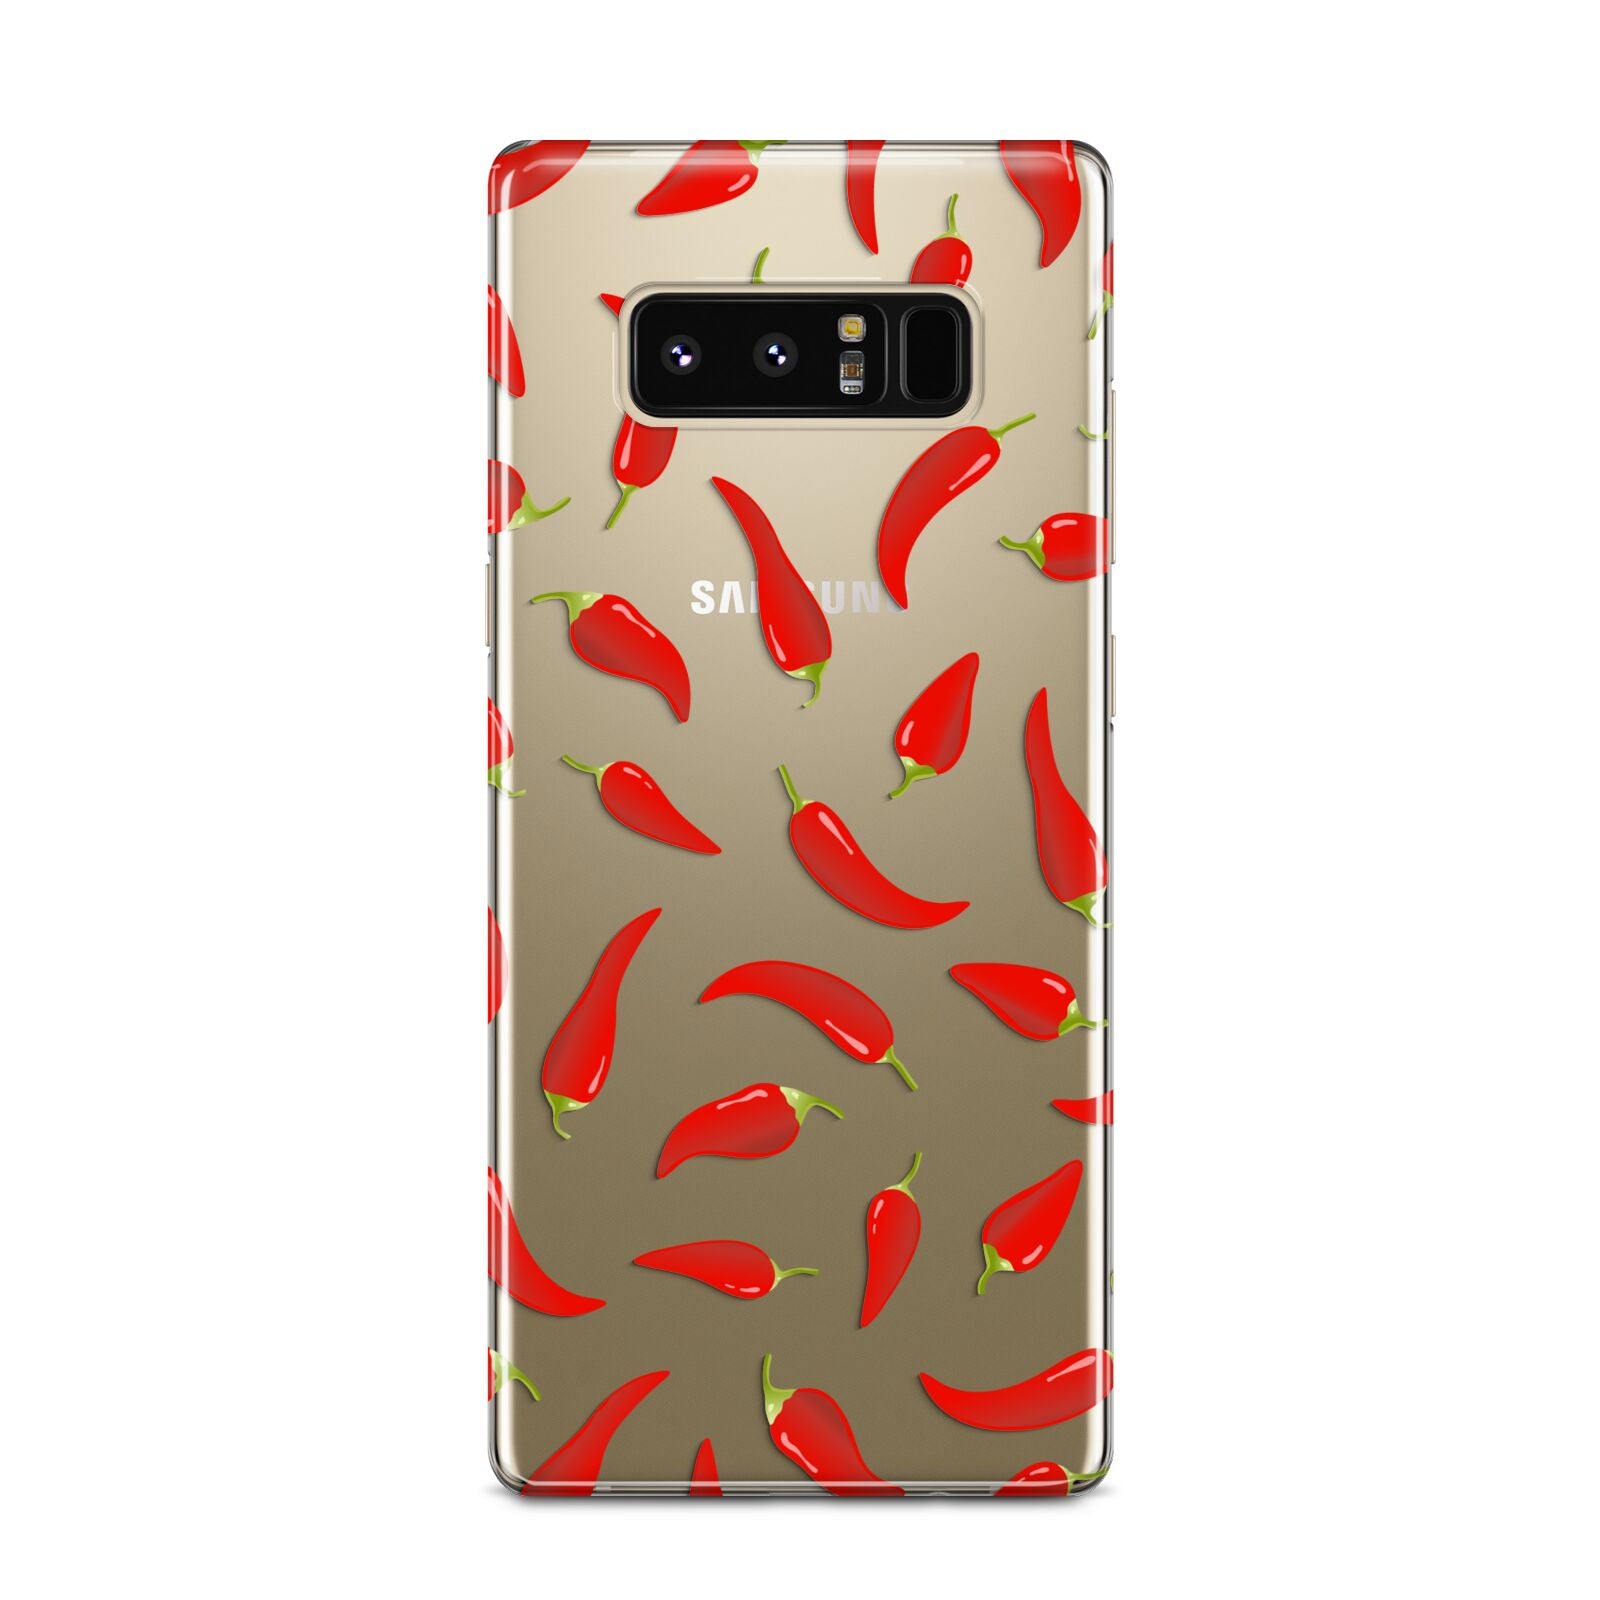 Chilli Pepper Samsung Galaxy Note 8 Case